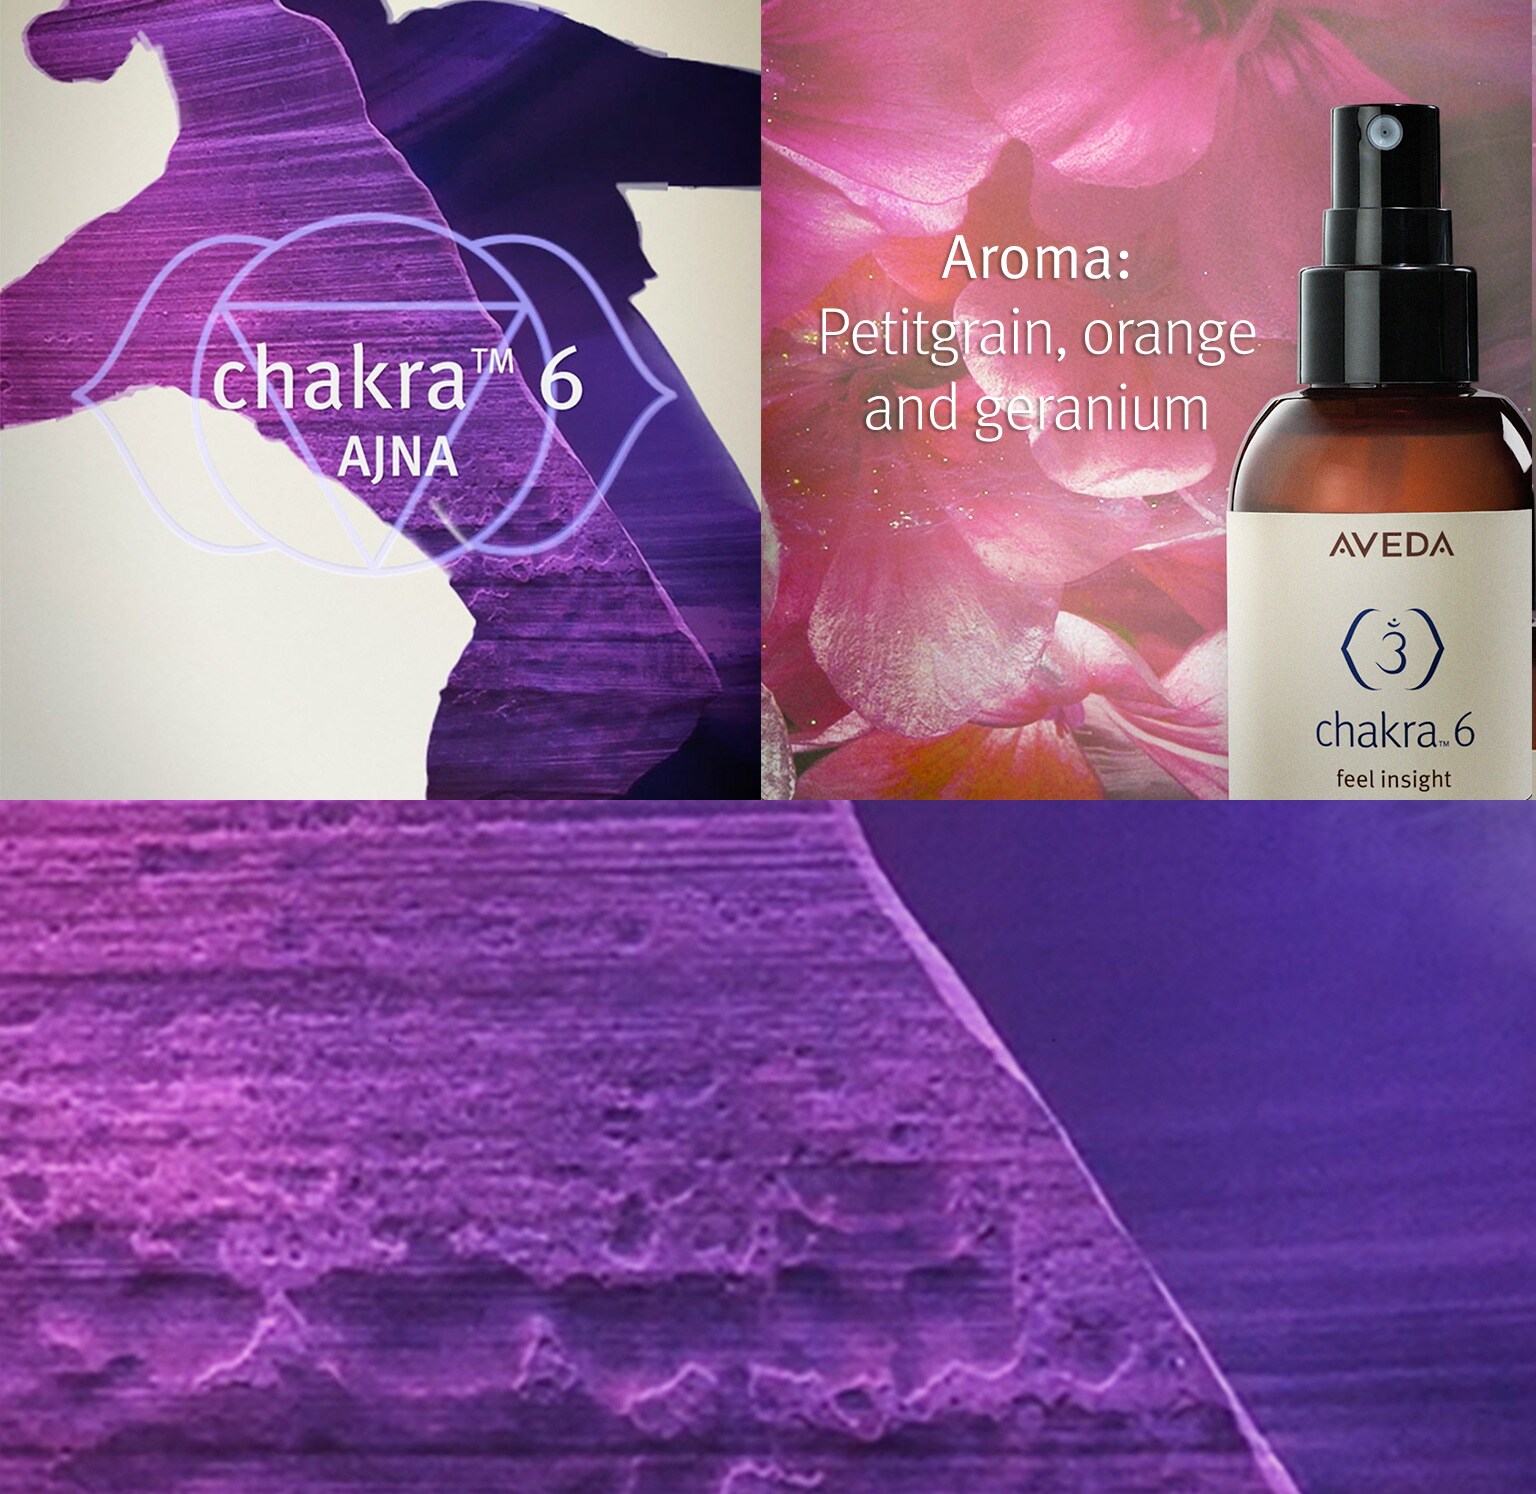 Chakra 6 aroma includes petitgrain, orange and geranium